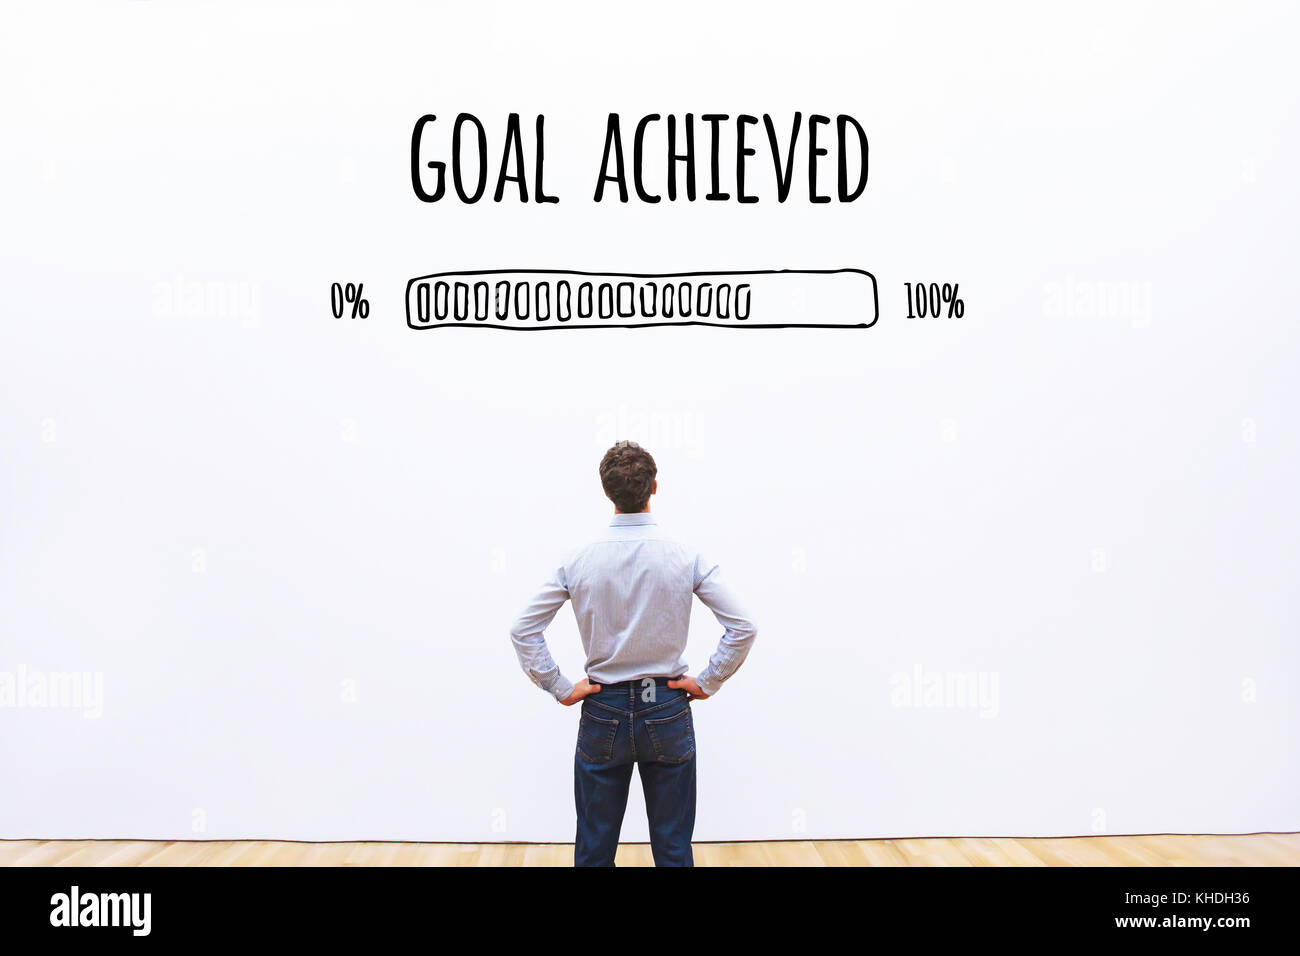 goal achieved progress loading bar, concept of achievement process Stock Photo